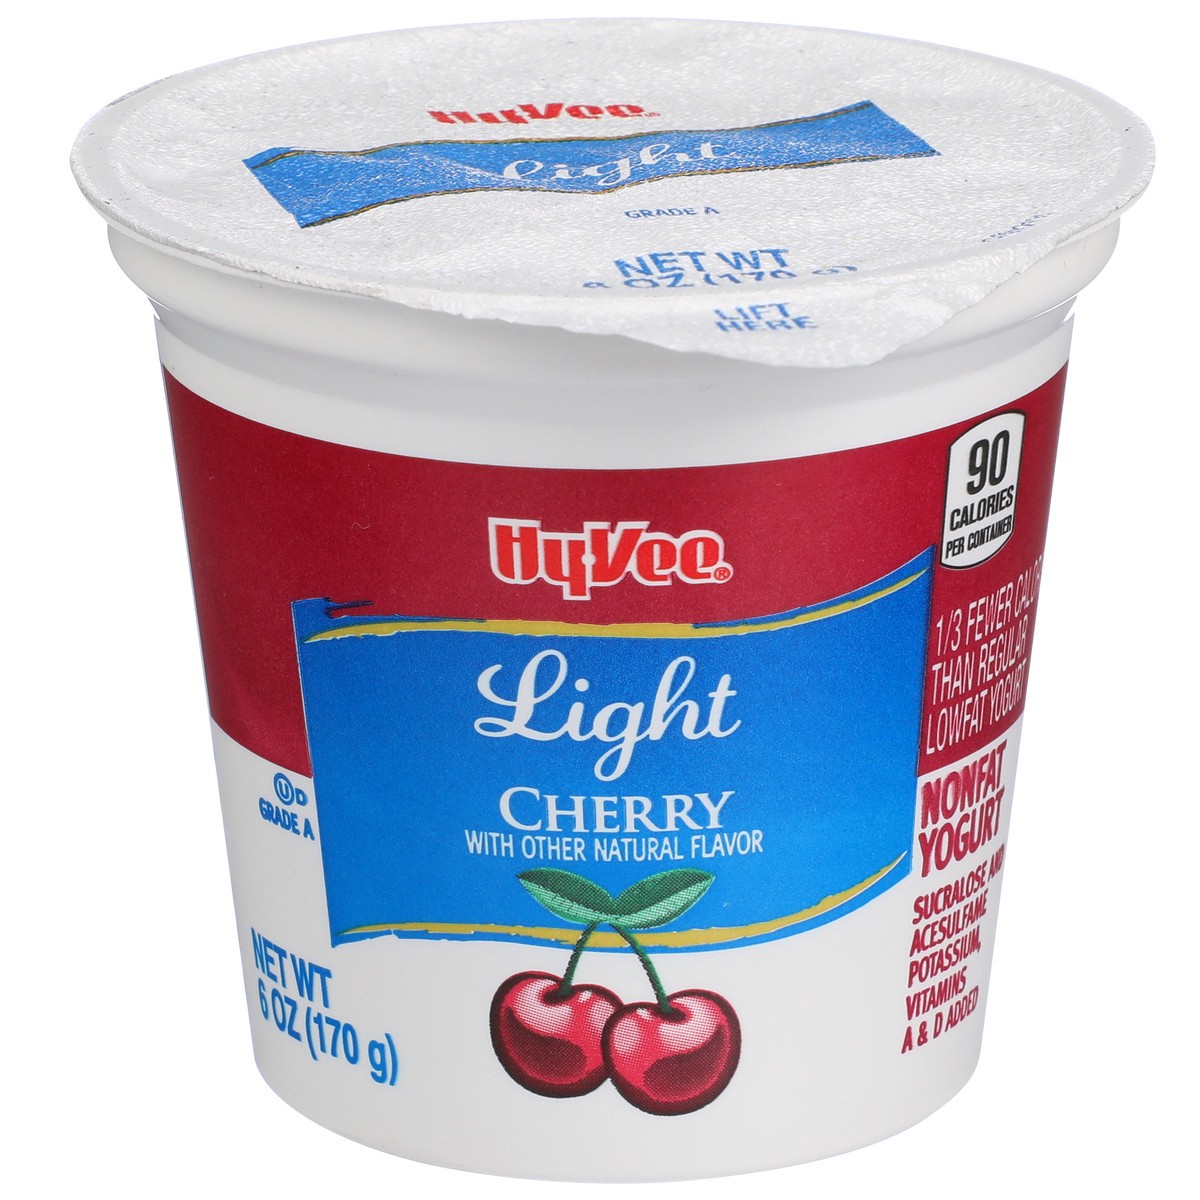 slide 1 of 8, Hy-vee Cherry Light Nonfat Yogurt, 6 oz